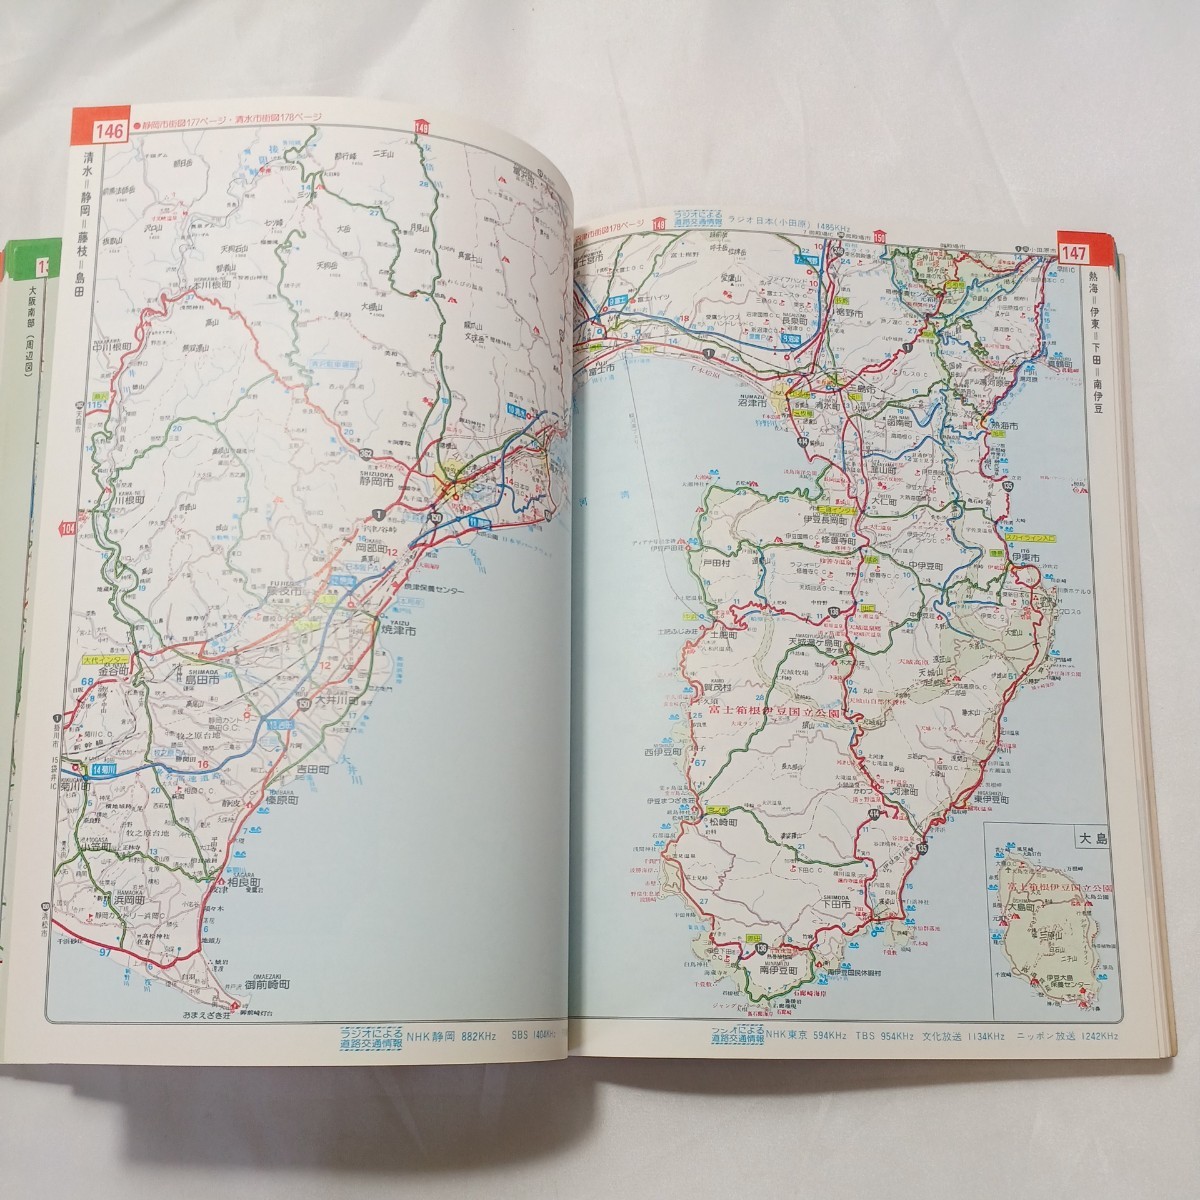 zaa-500♪全日本道路地図帳1/300.000 ナンバー出版; 刊行年 1989年_画像3